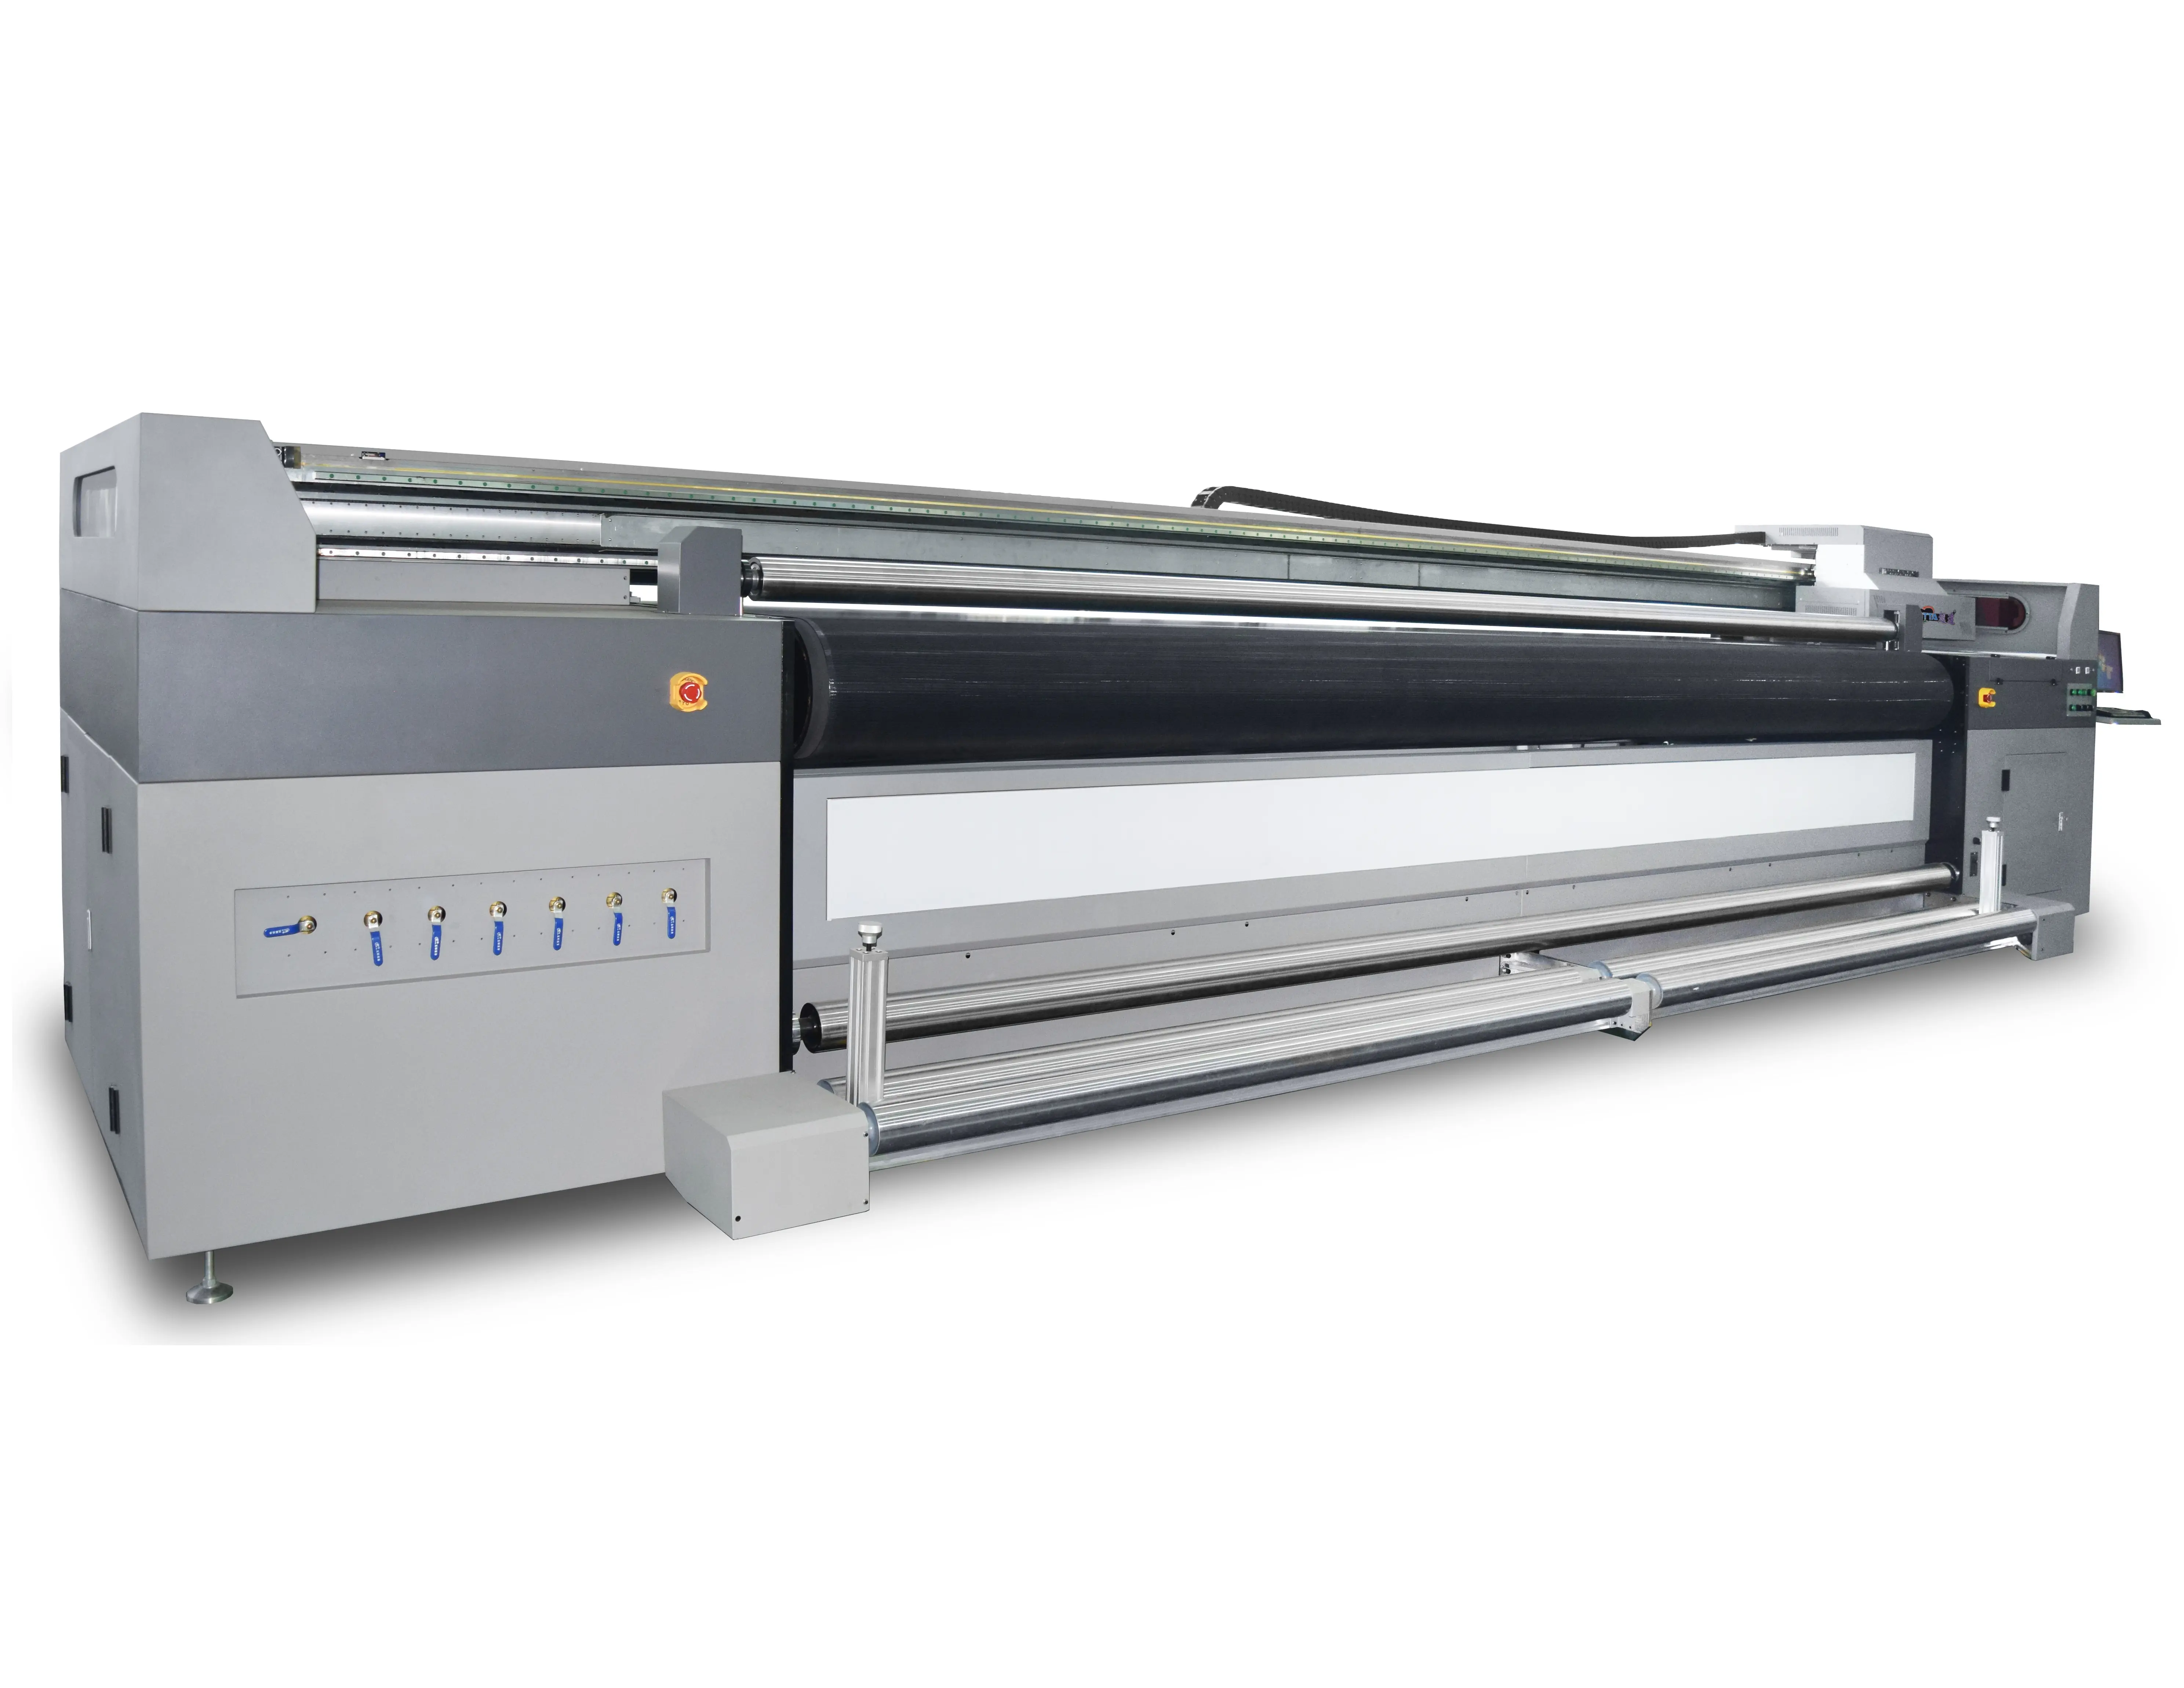 Lange Betriebszeit 5m Hybrid-UV-Drucker Hochs tabiler kommerzieller LED-Drucker